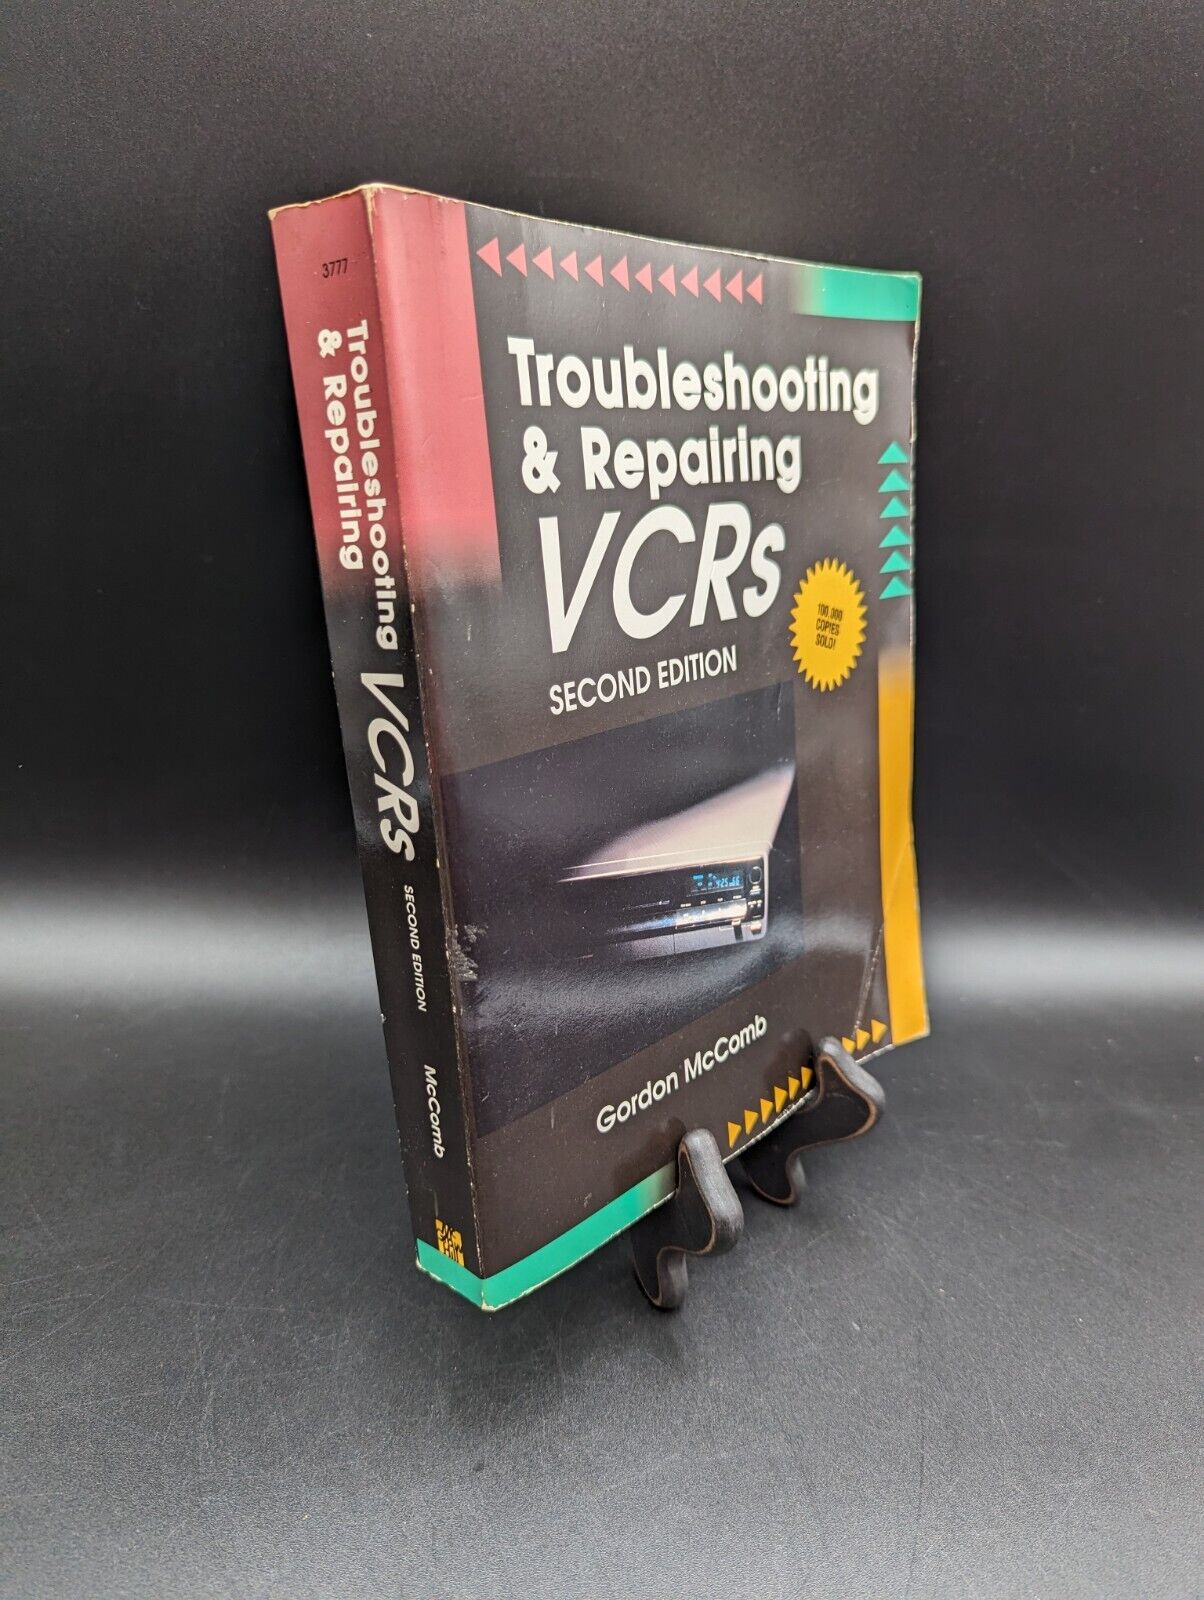 VTG Troubleshooting & Repairing VCRs by Gordon McComb 1991 2nd edition